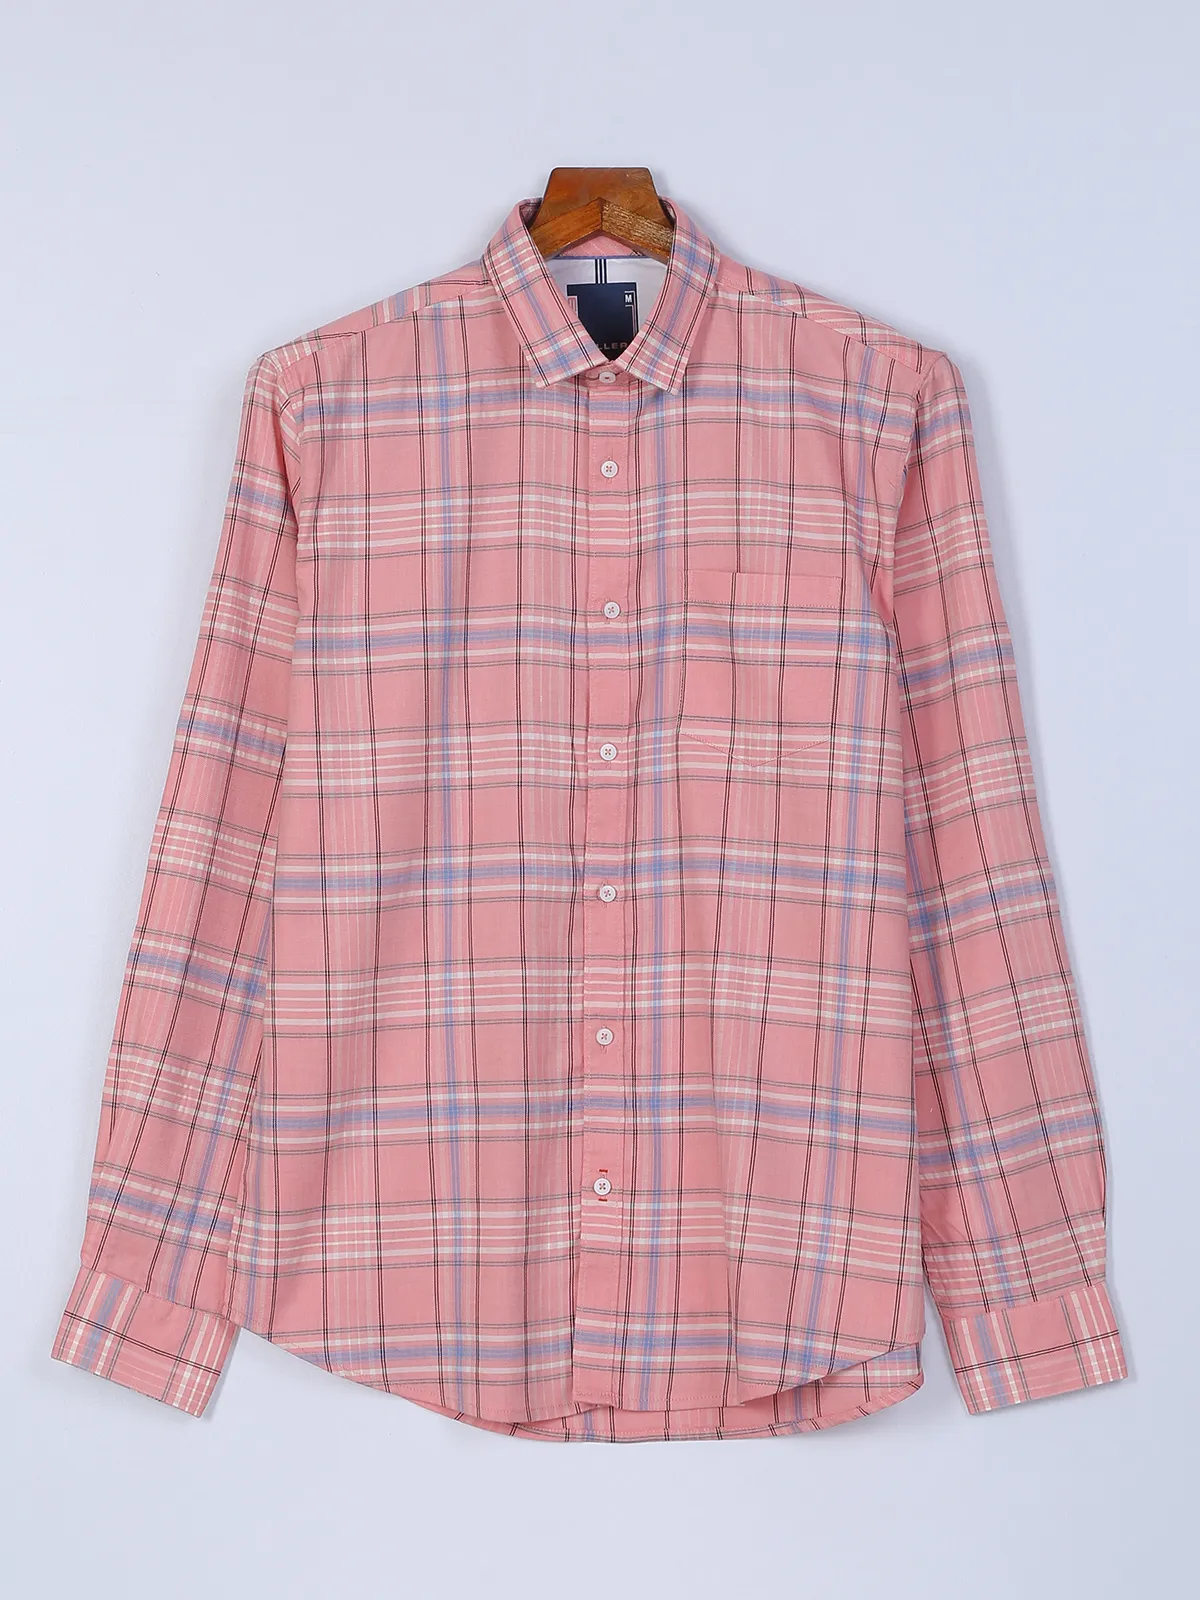 Killer pink checks cotton shirt